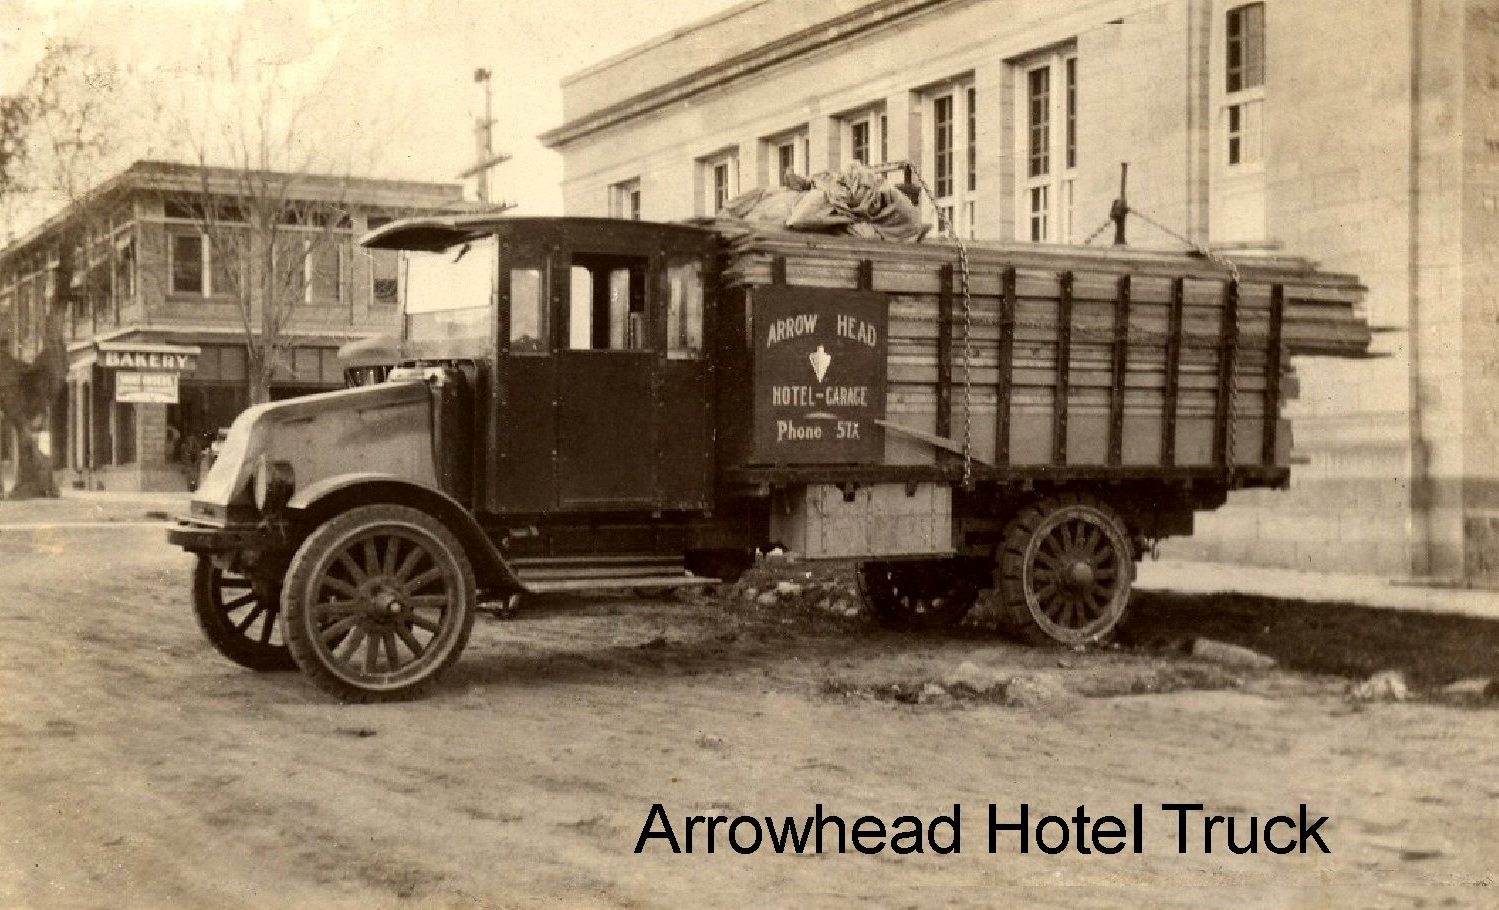 The Arrowhead Hotel-Garage truck